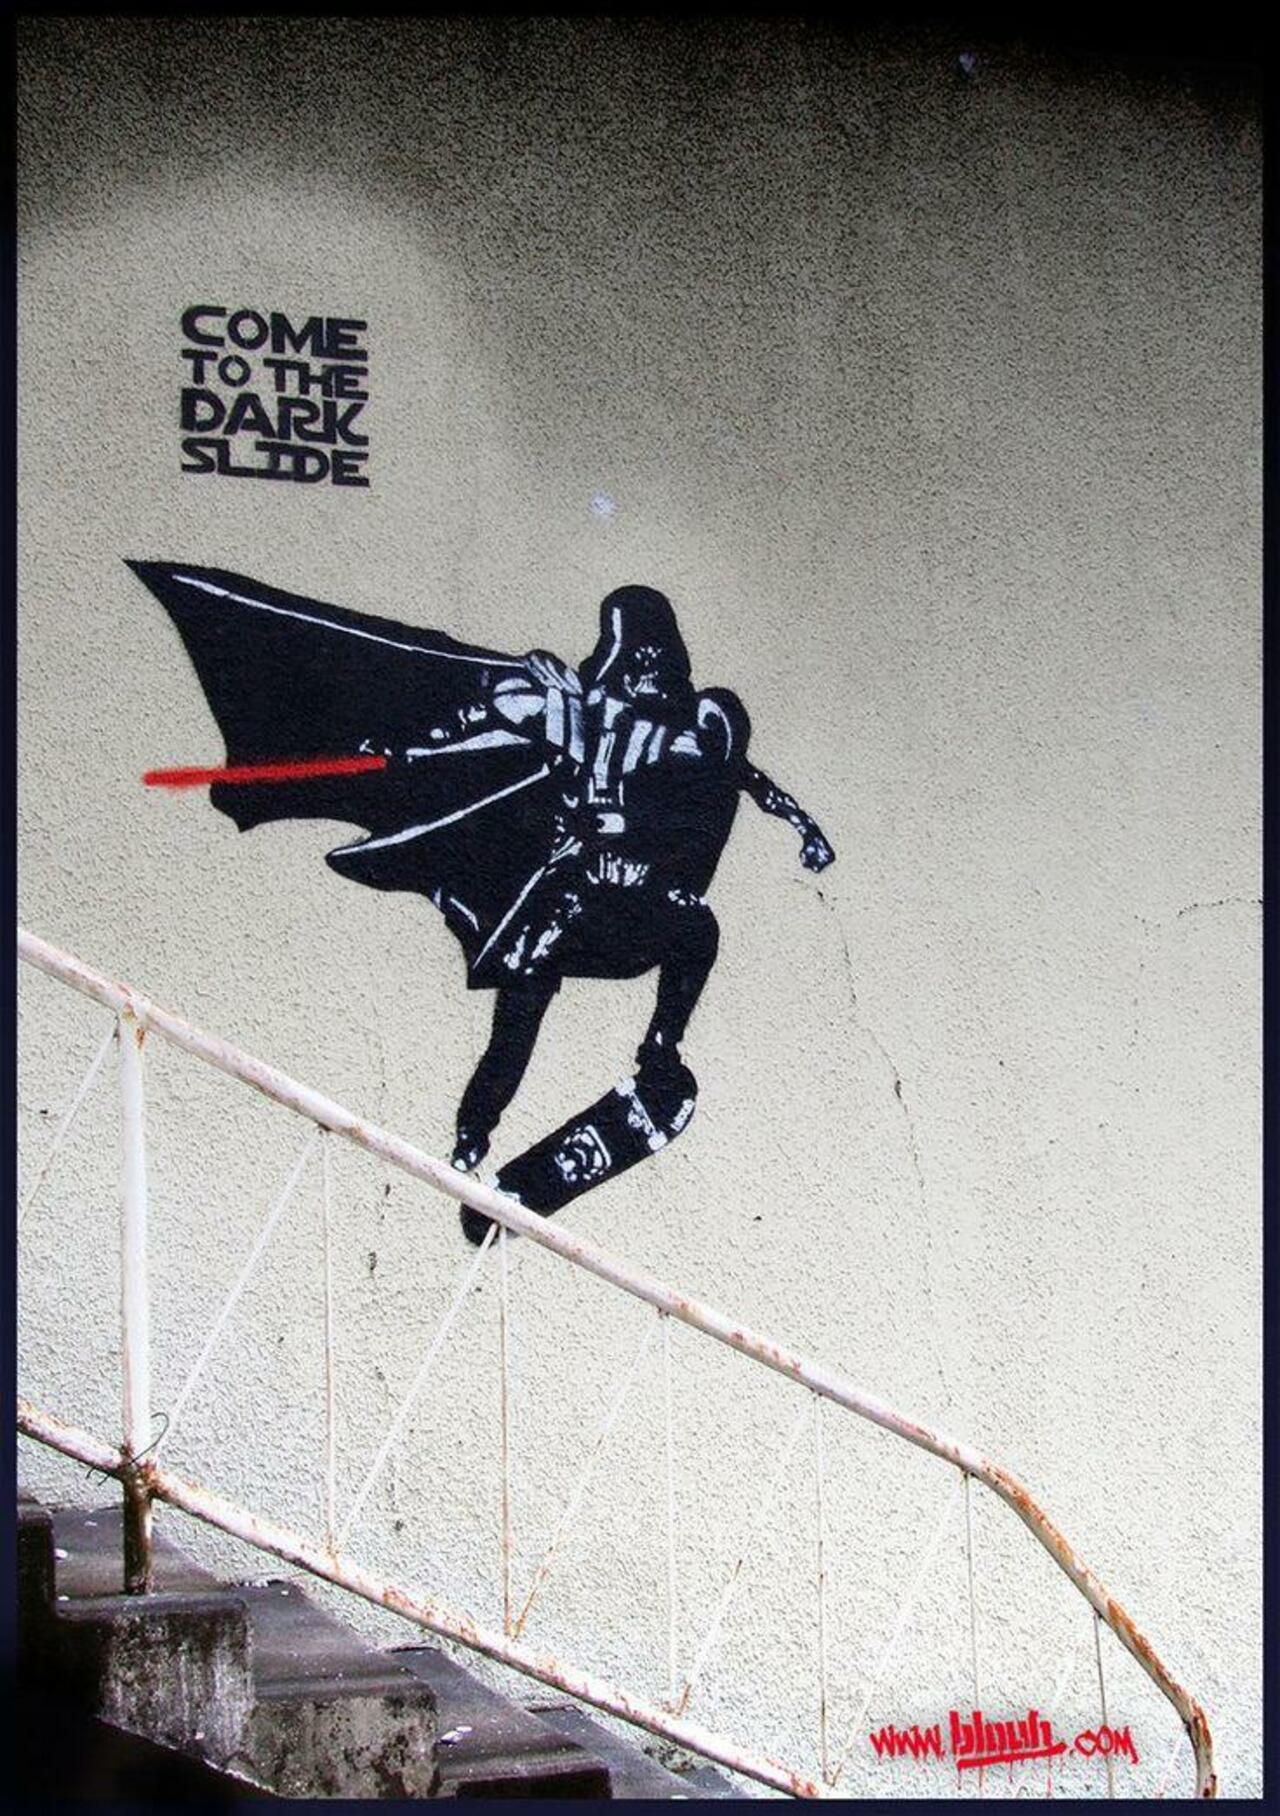 "@5putnik1: Darth Vader rail-sliding #dartvader #skating #graffiti #streetart #art #dope . : http://t.co/6F0xCbepHU" ☆ ☆ ☆